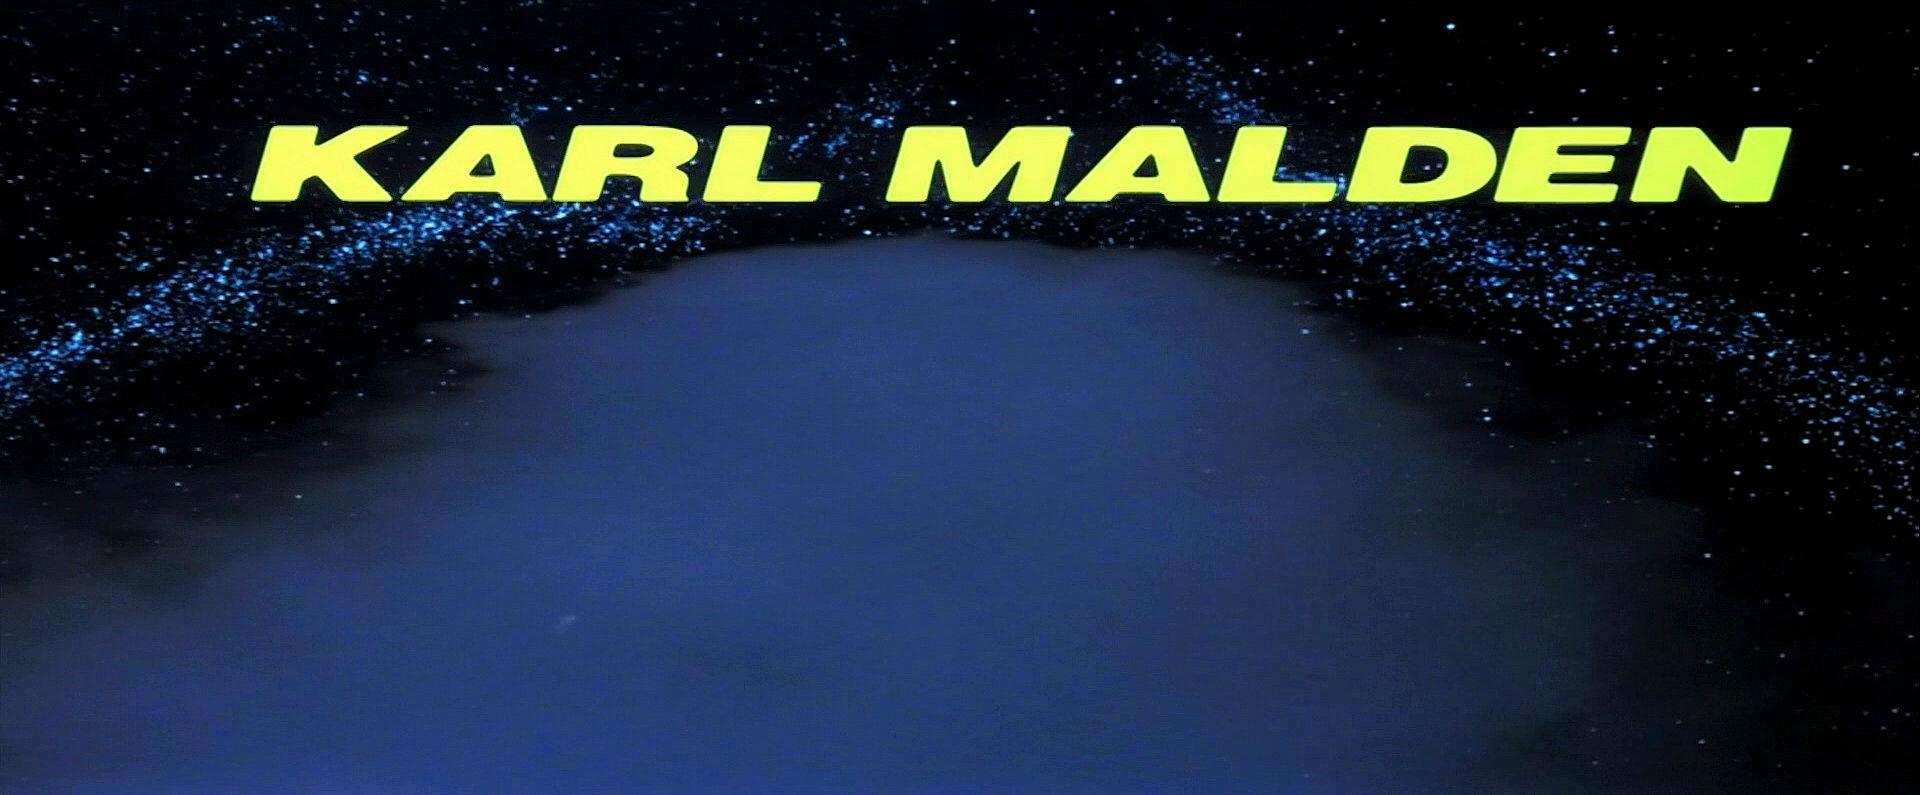 Main title from Meteor (1979) (3). Karl Malden